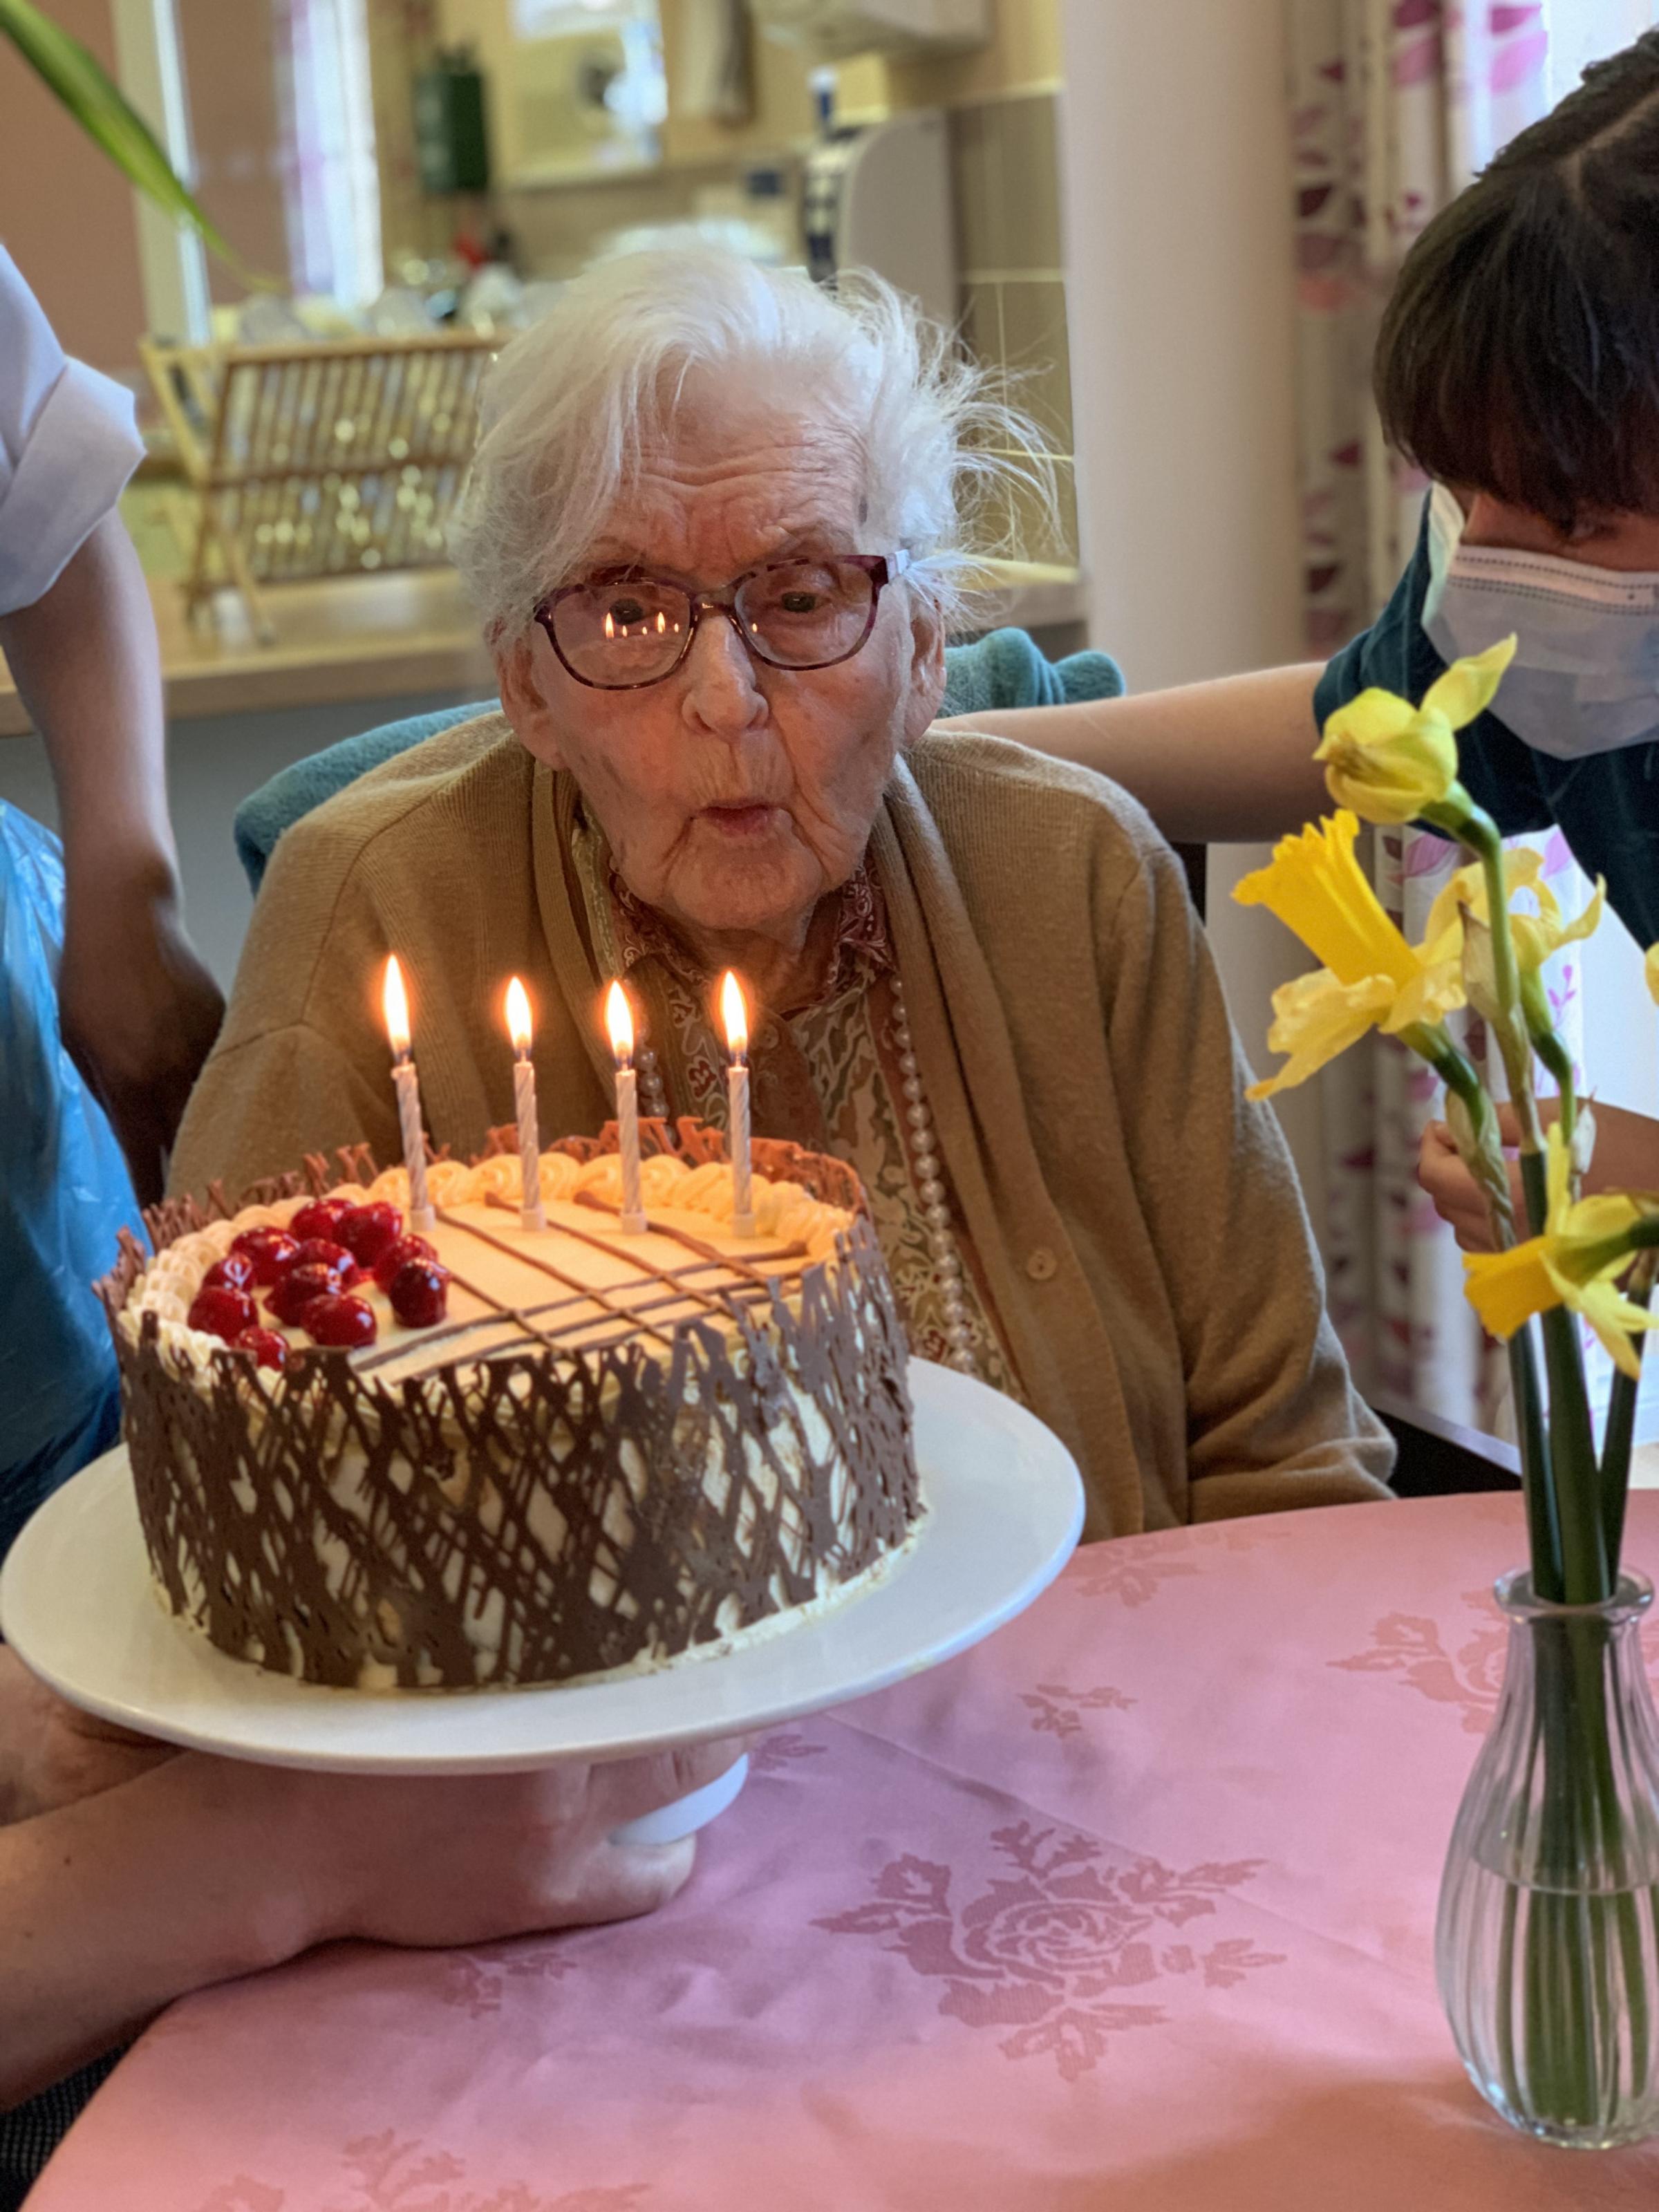 She thoroughly enjoyed her 104th birthday 